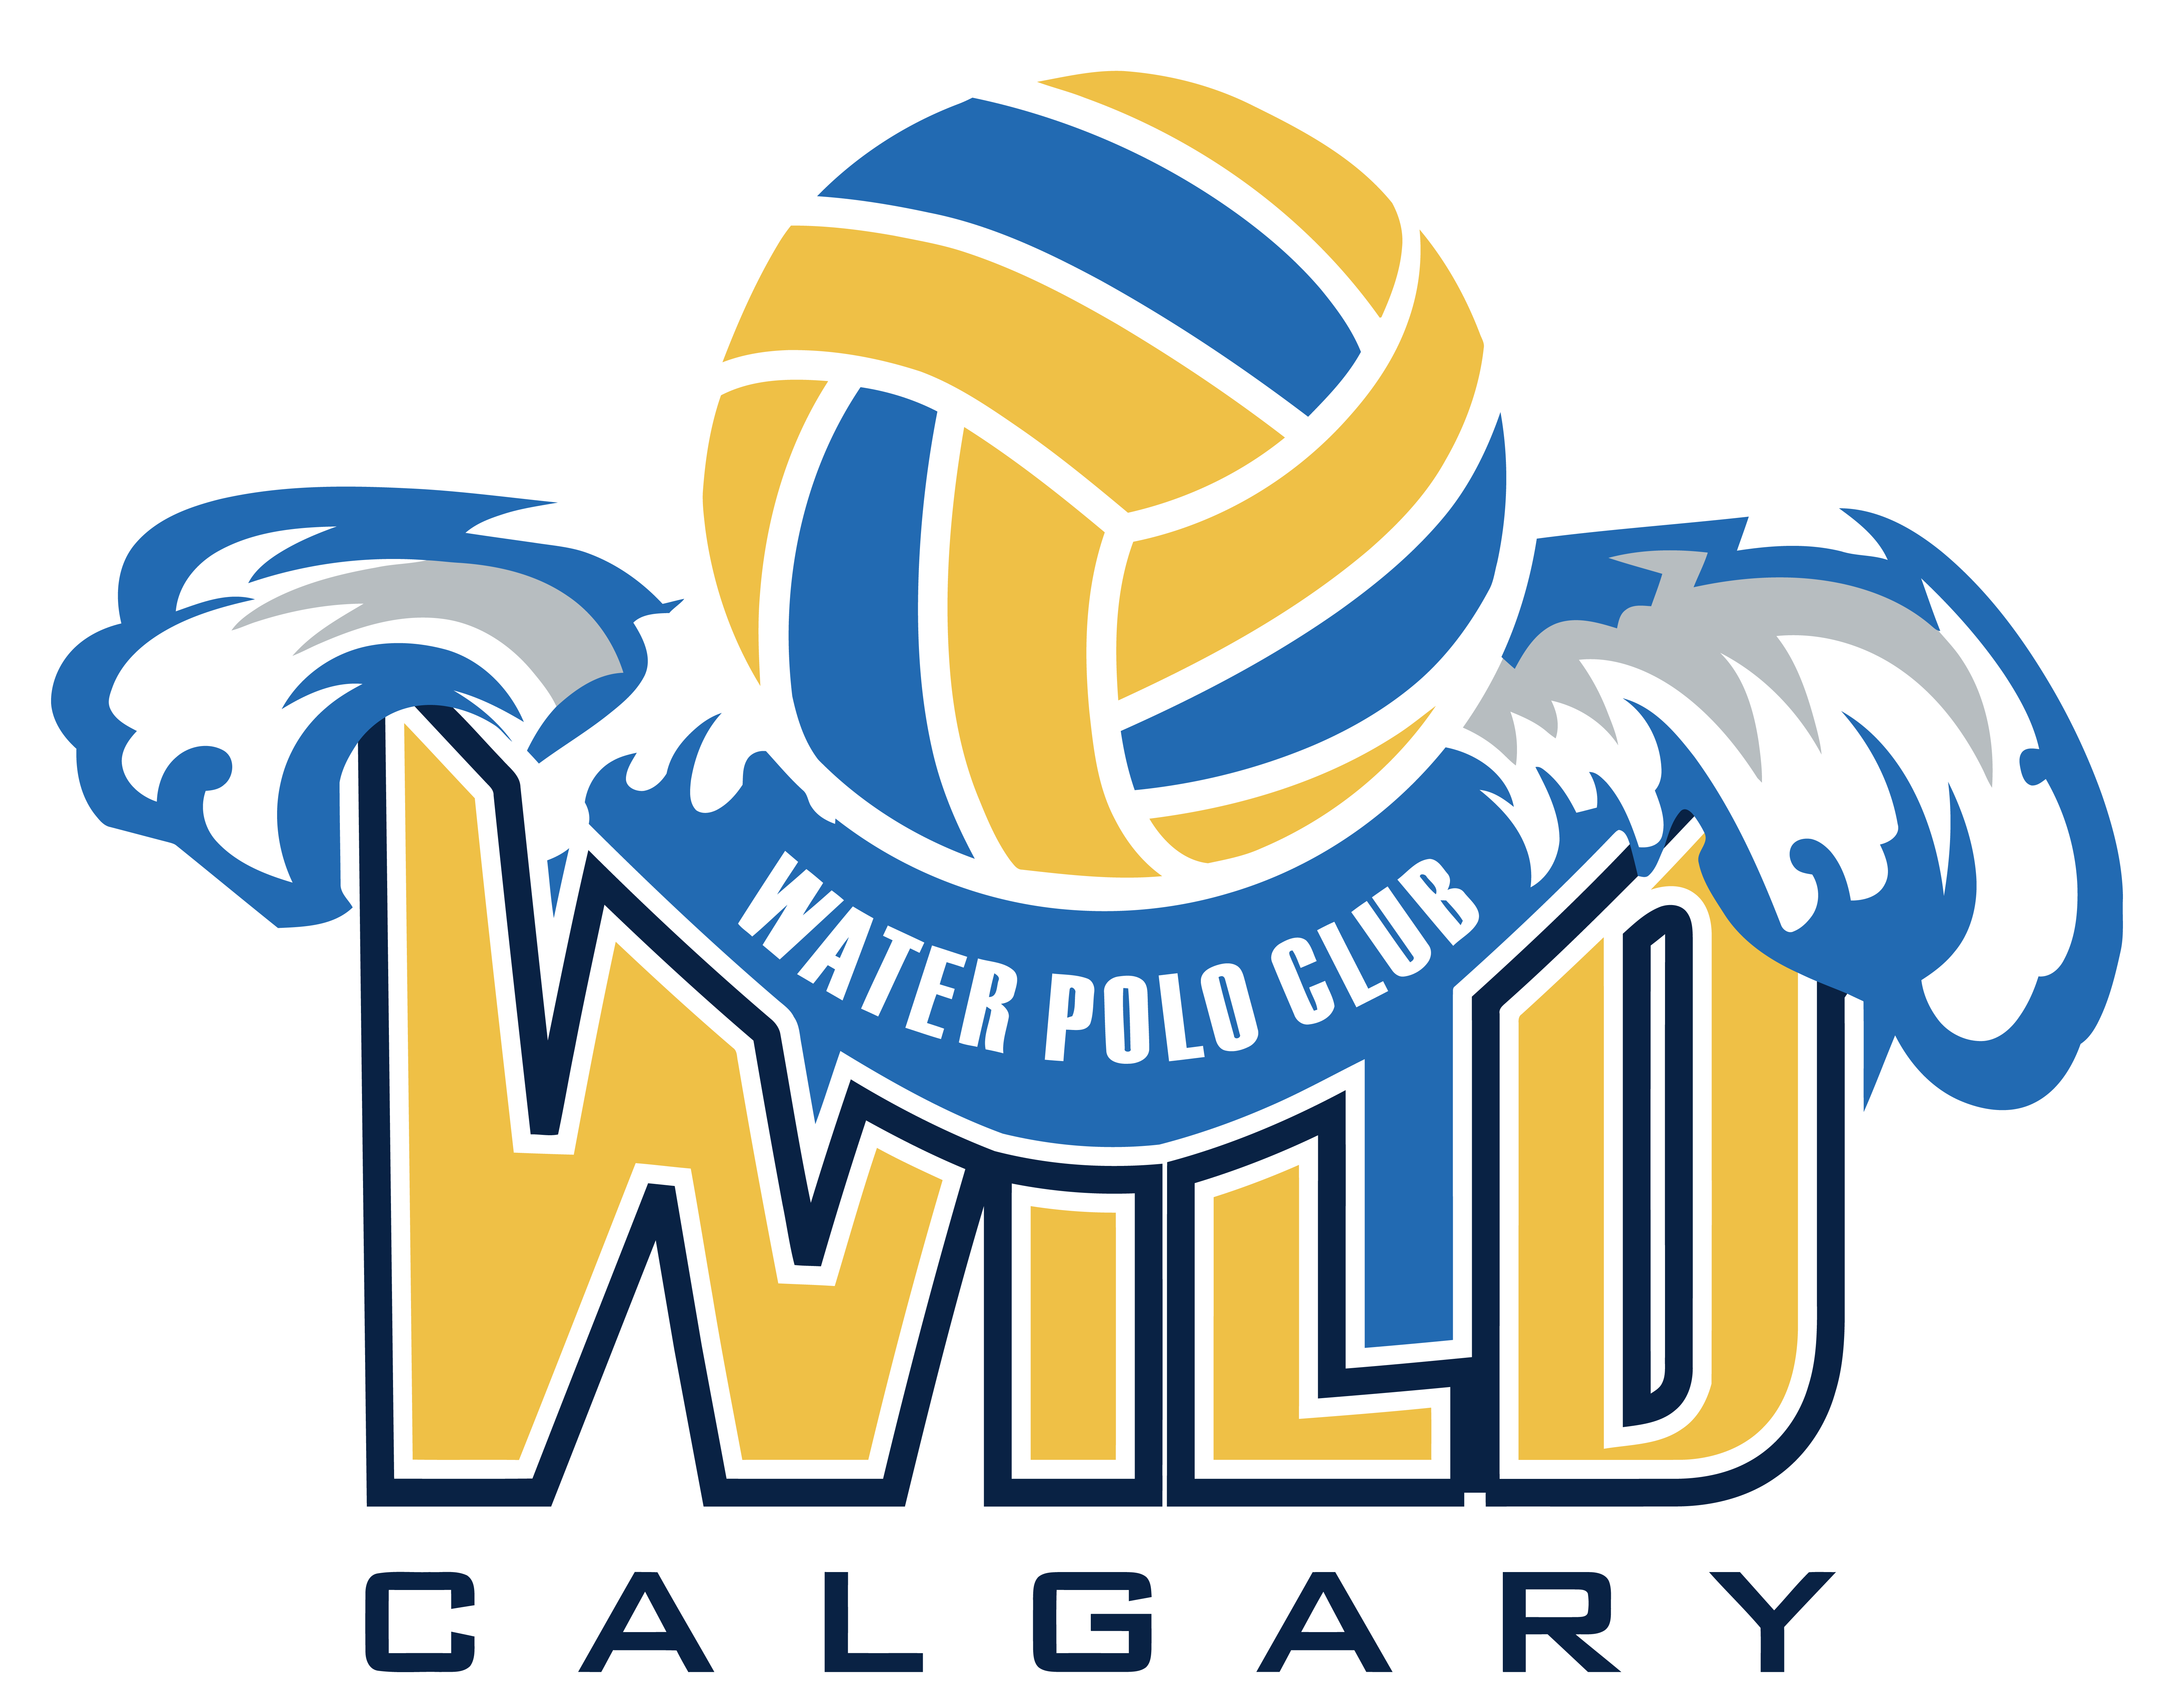 Calgary Wild Water Polo Club